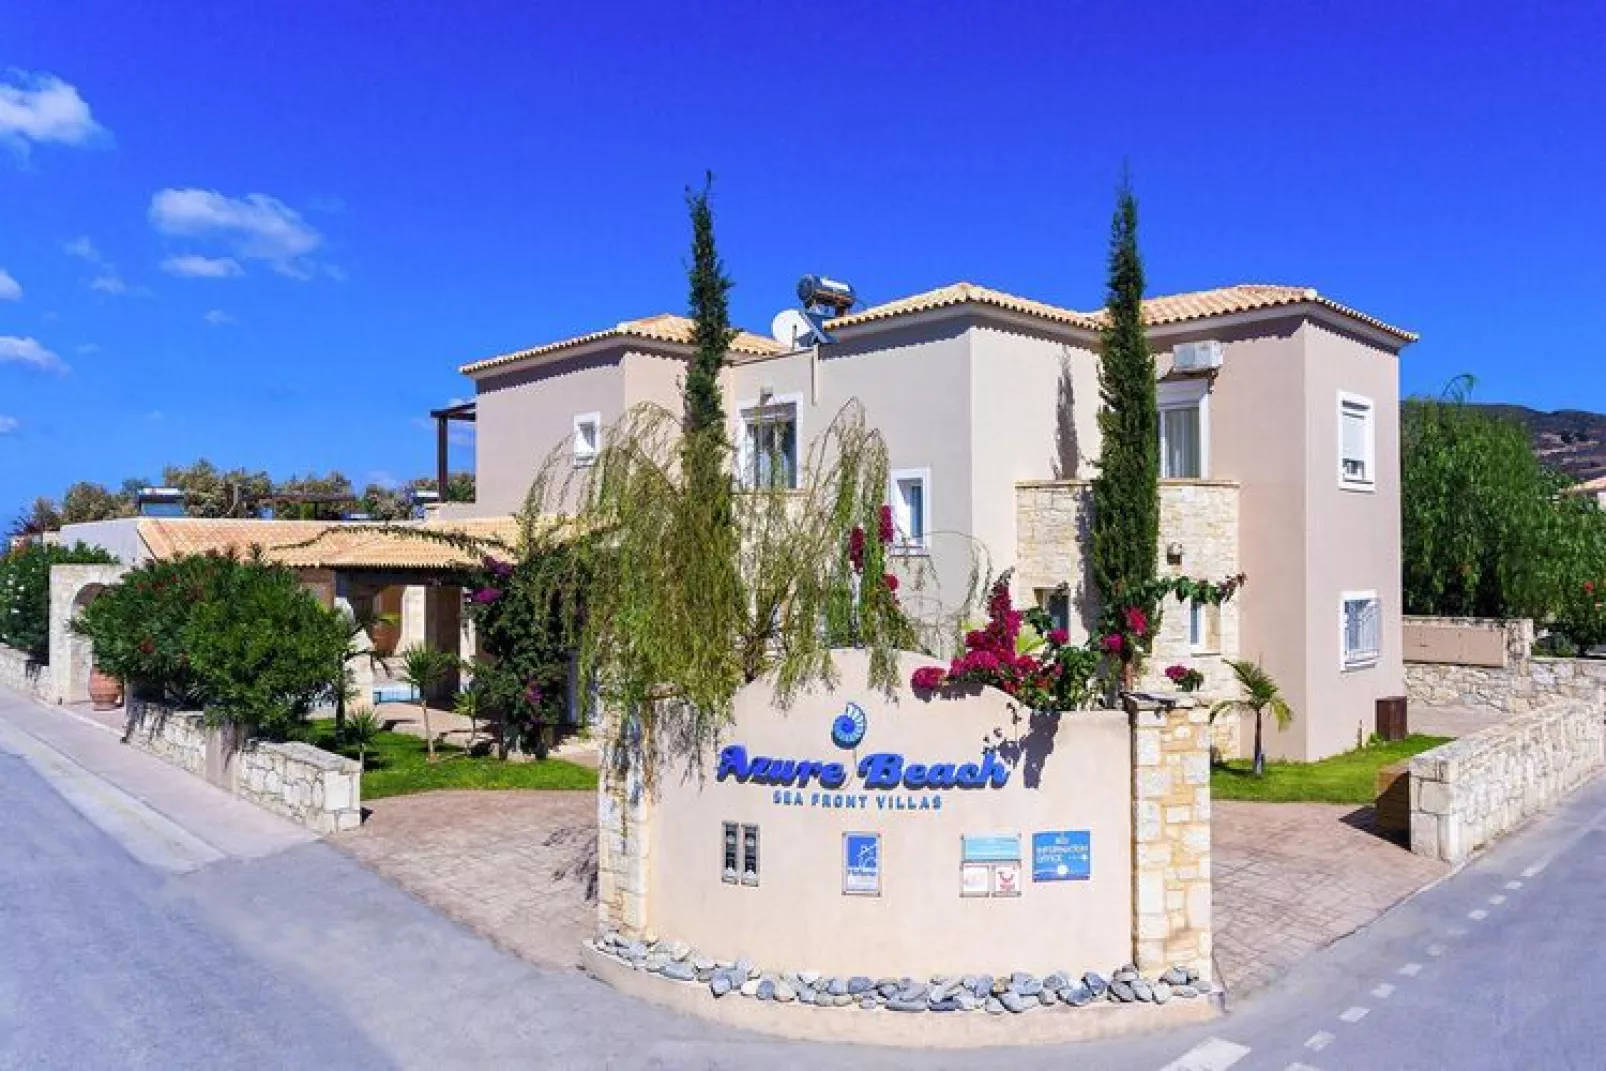 Villas Azure Beach, Nopigia-1-bedroom-villa - 45 sqm with sharing pool